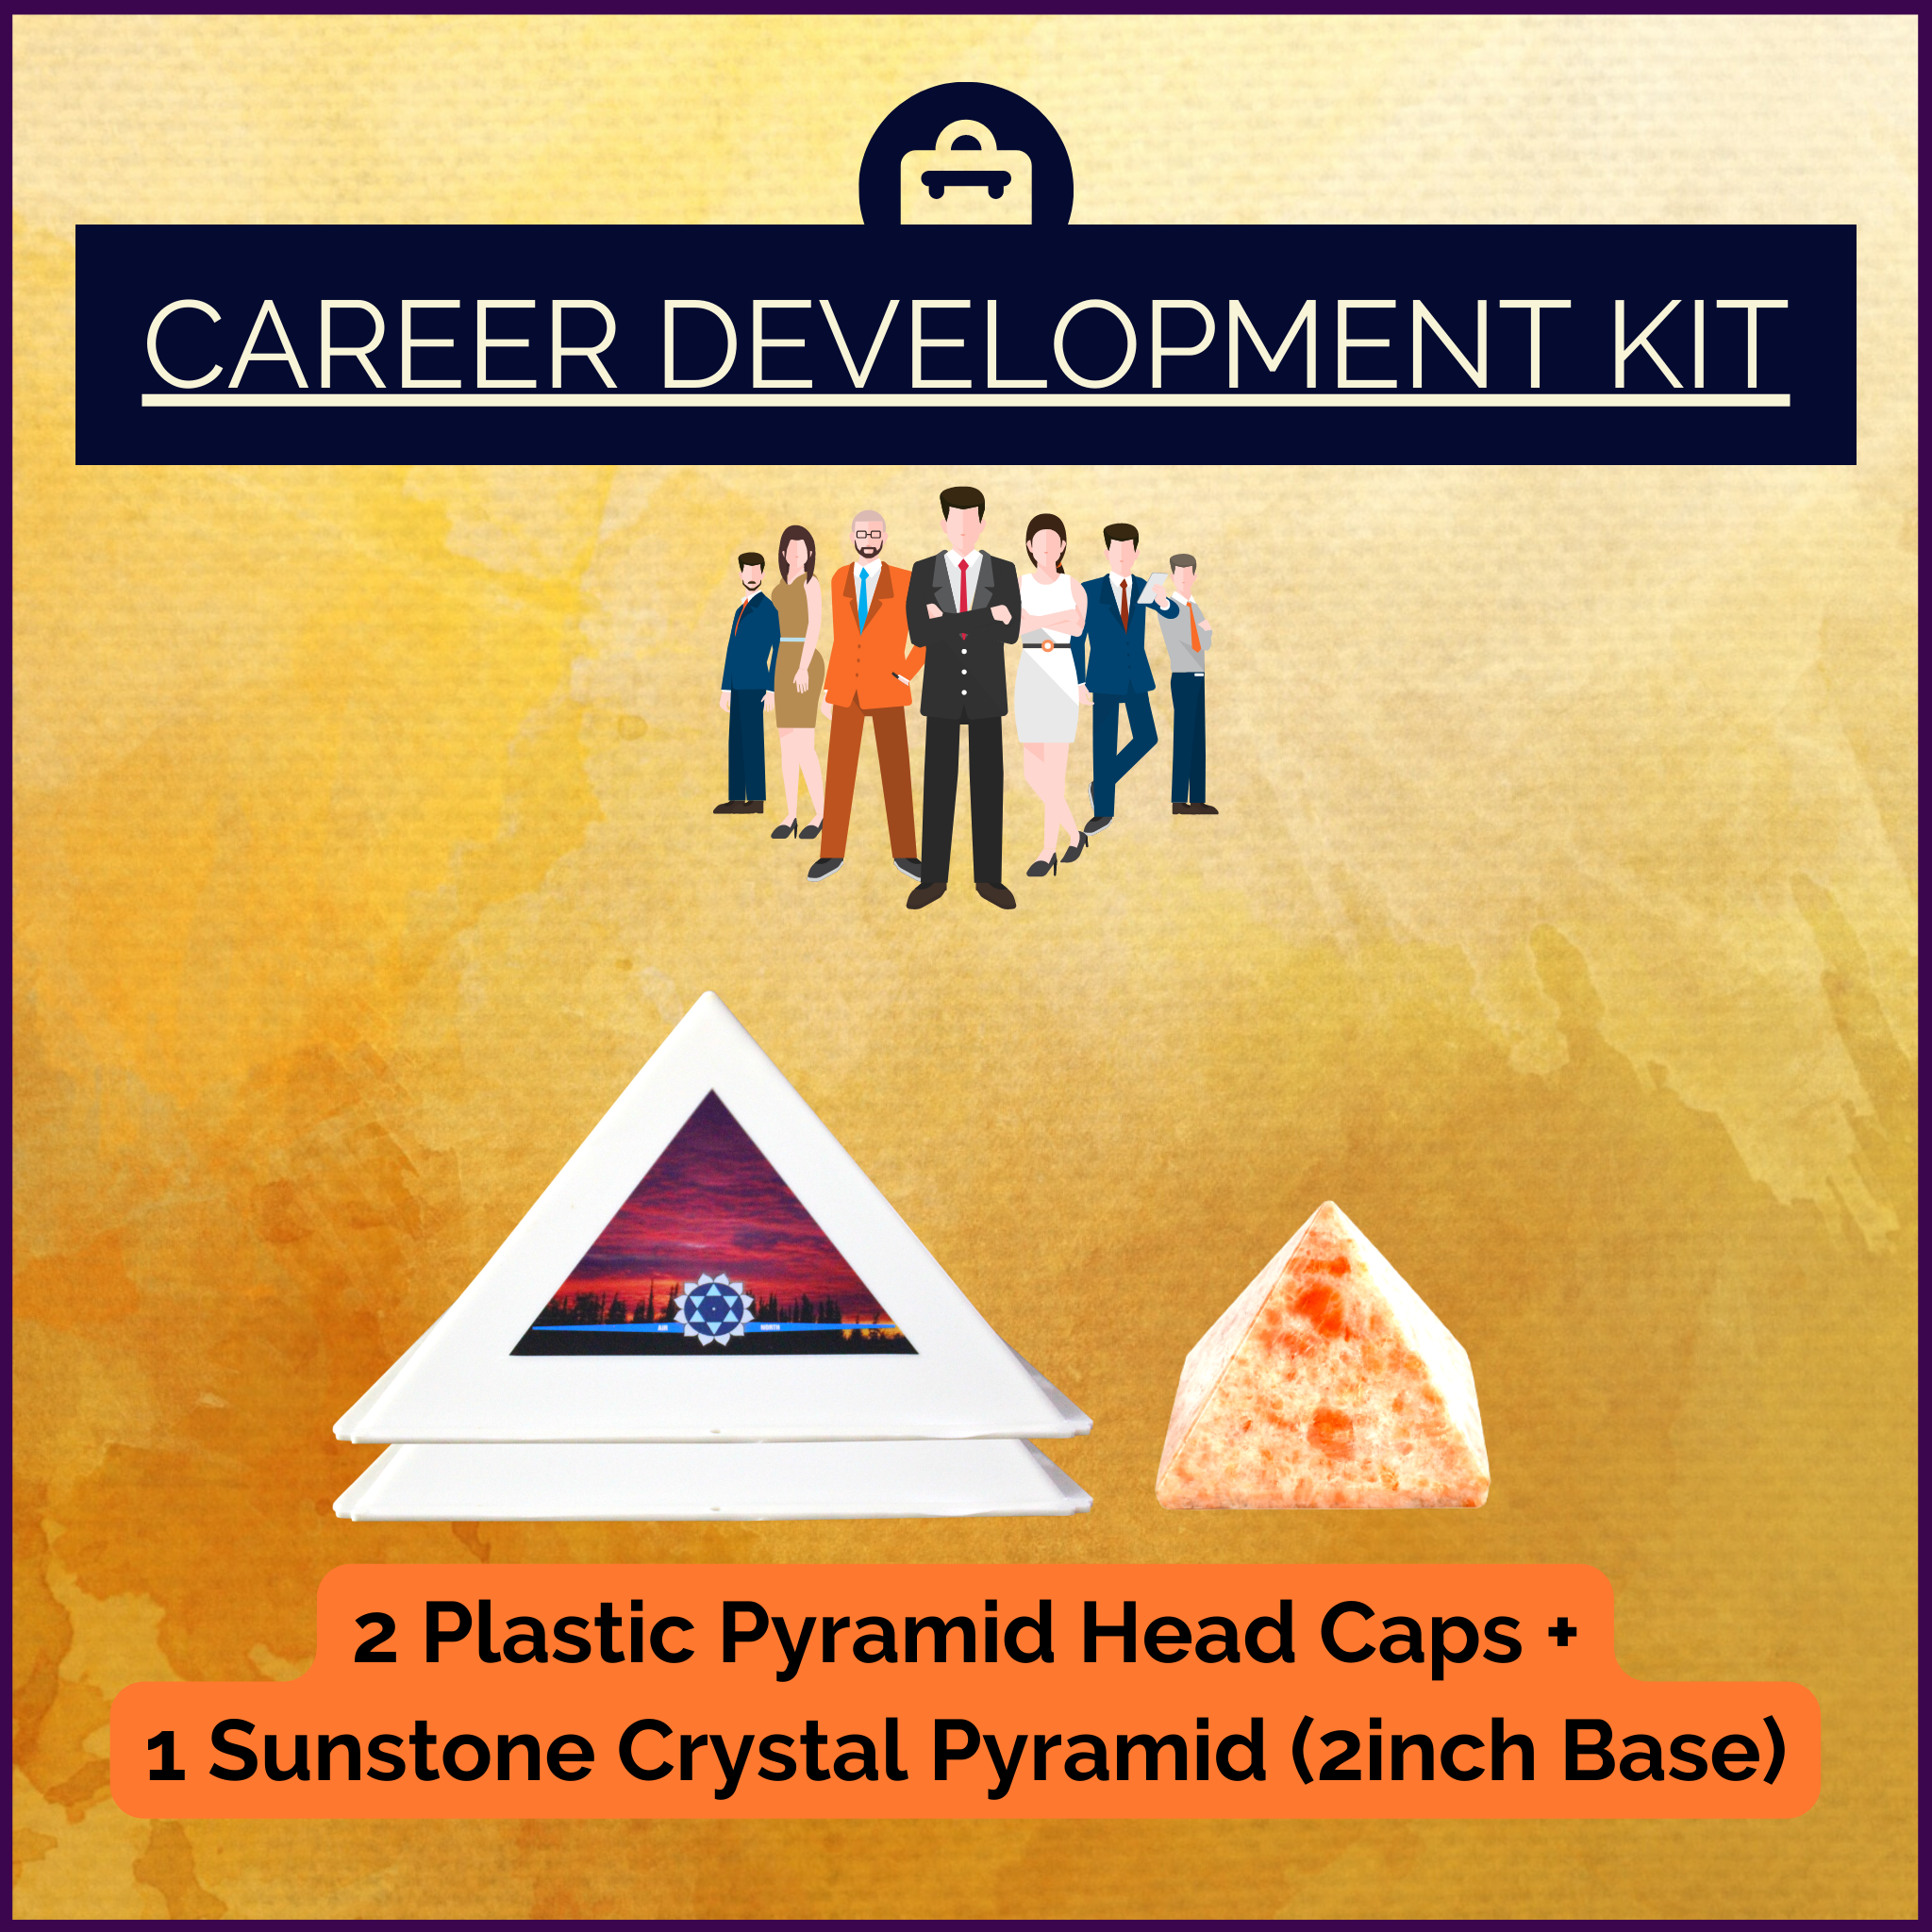 Career Development Kit - 2 Pyramid Meditation Head Caps + 1 Sunstone Crystal Pyramid (2inch) For Career Development-1